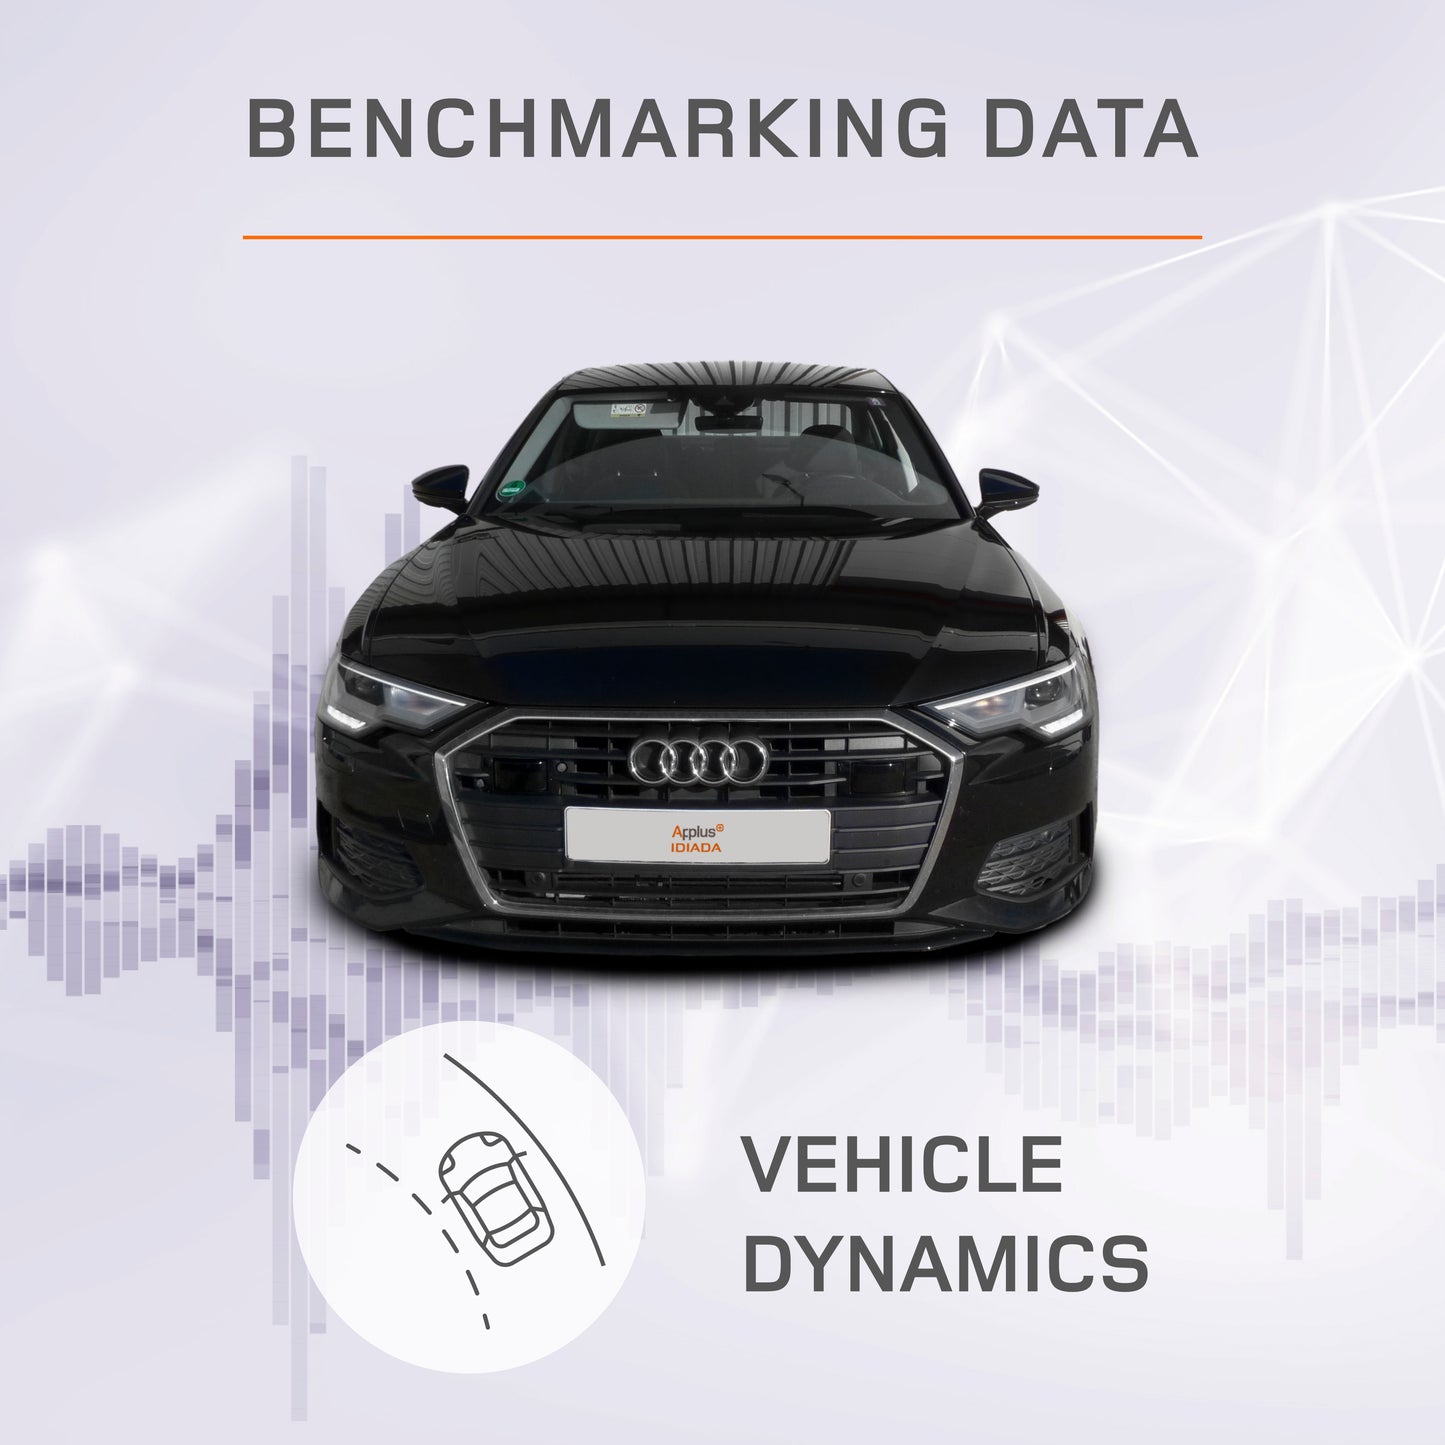 Vehicle Dynamics Benchmarking Reports – Audi A6 | Applus+ IDIADA